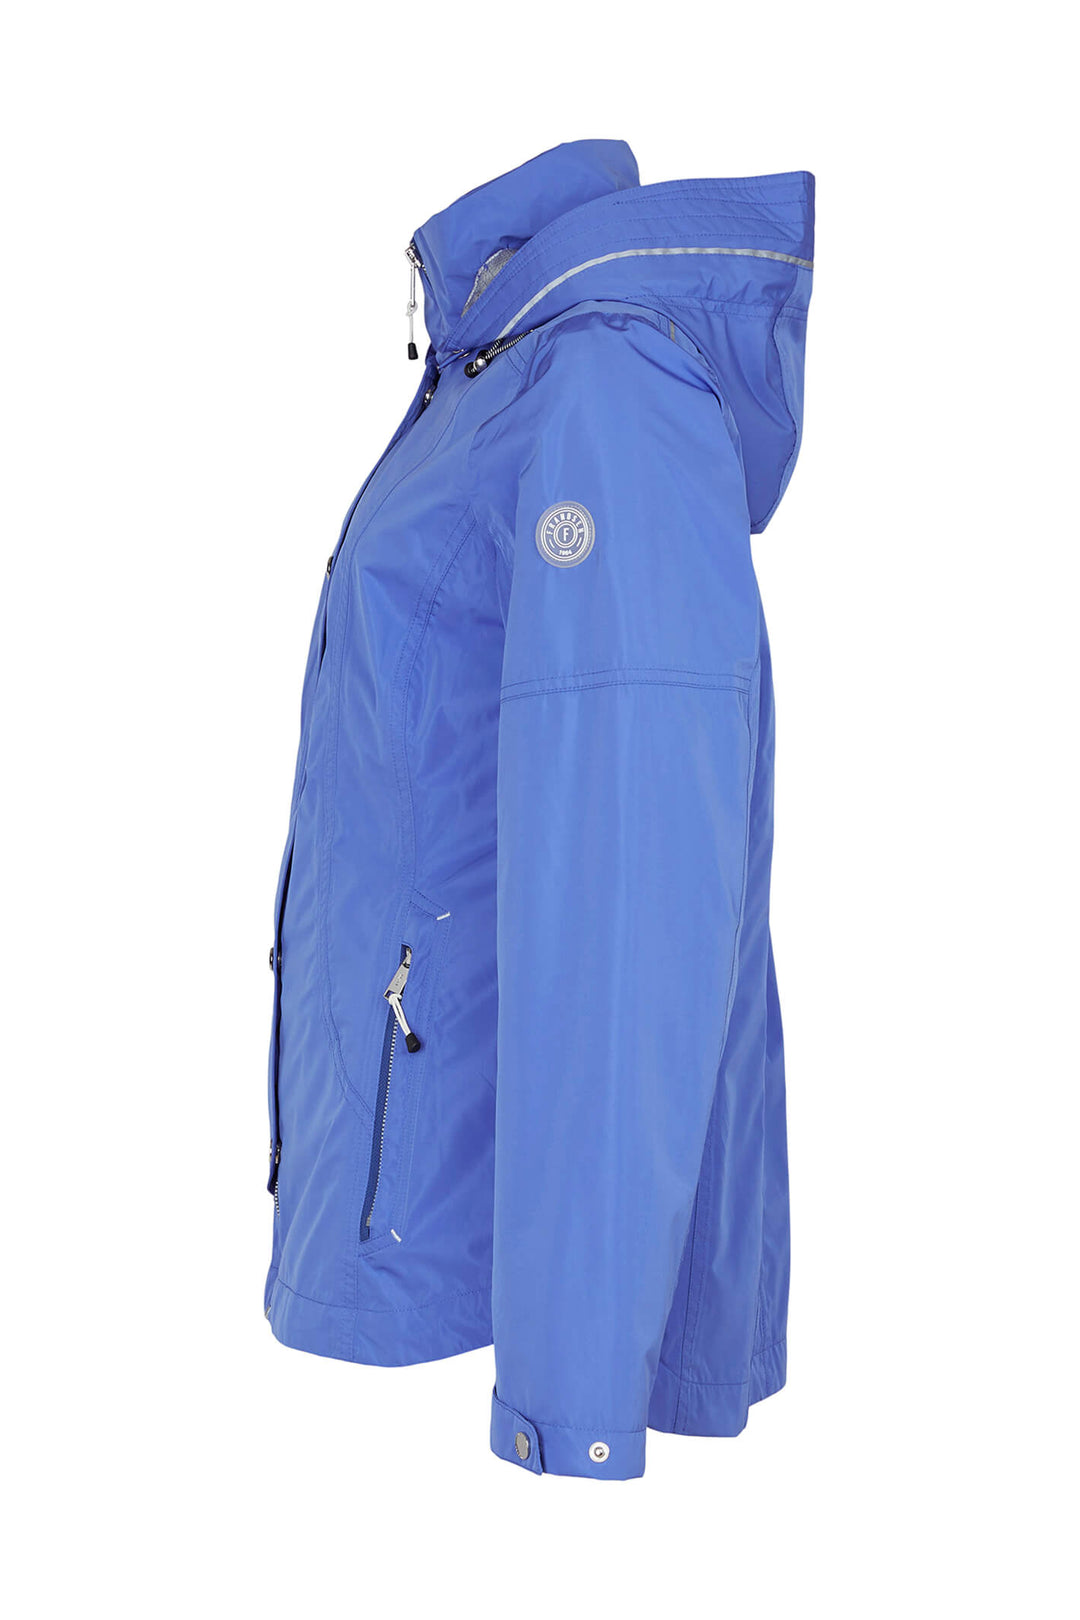 Fransen 455-162-60 Blue High Neck Jacket With Hood - Dotique